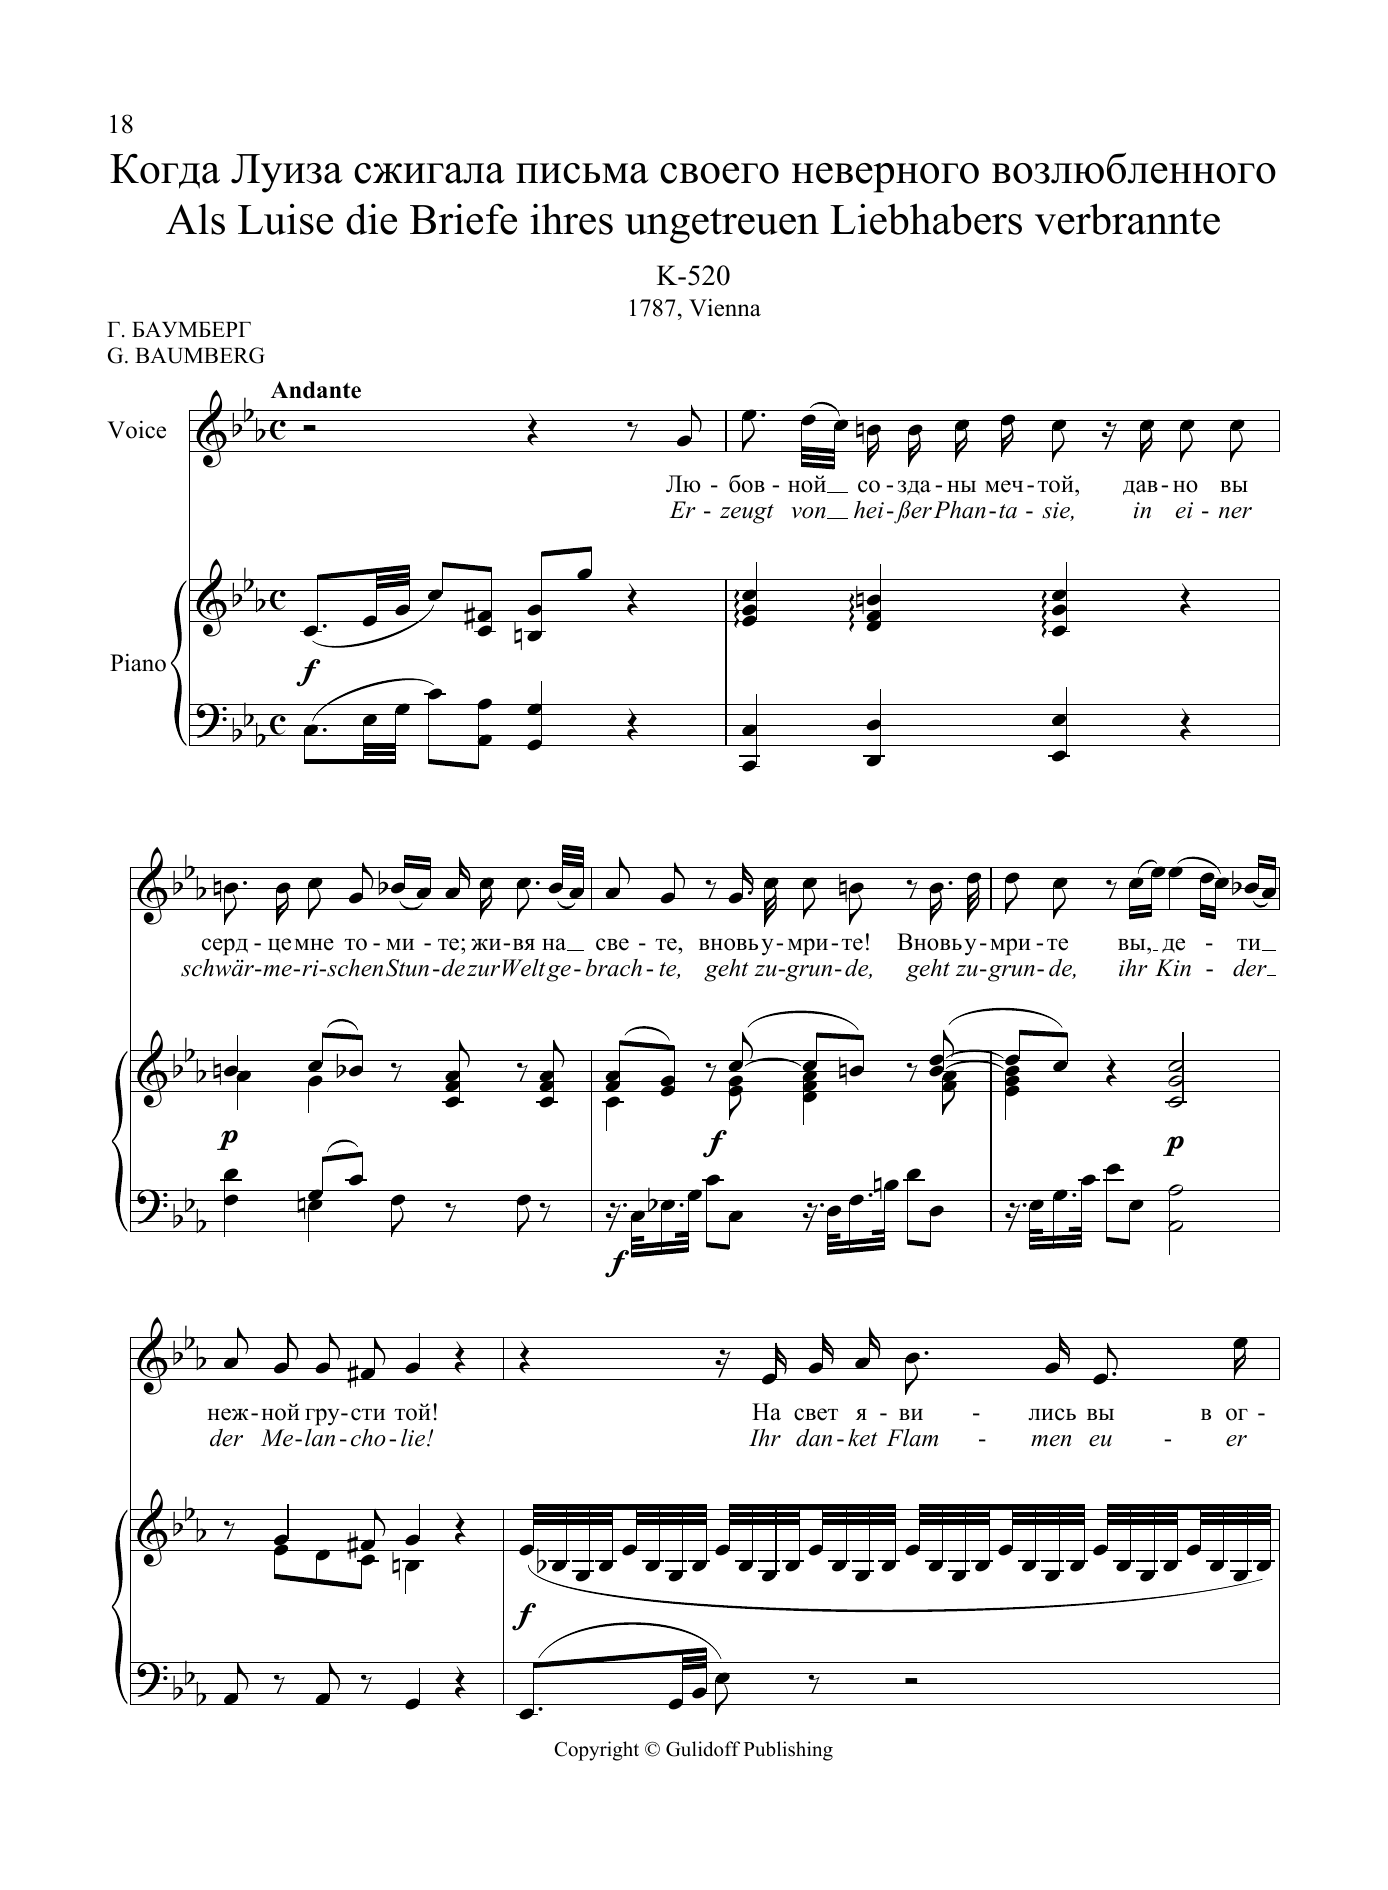 Wolfgang Amadeus Mozart 36 Songs Vol. 2: Als Luise die Briefe ihres ungetreuen Liebhabers verbrannte sheet music notes and chords arranged for Piano & Vocal